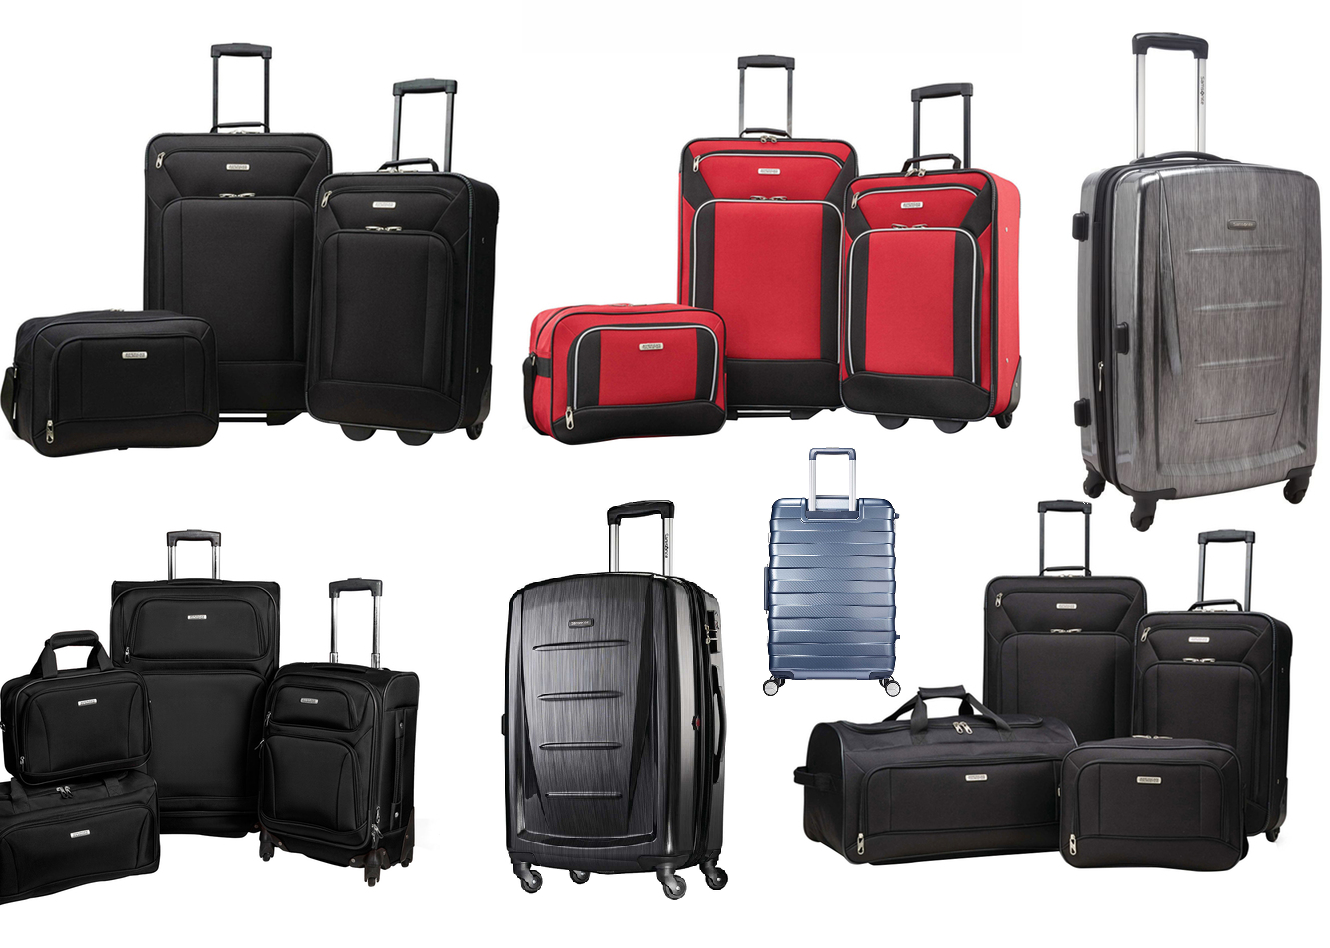 Open Box Luggage Sale: 3 Piece American Tourister Luggage Set $20.40, 4 Piece Set $29.75, 24 ...